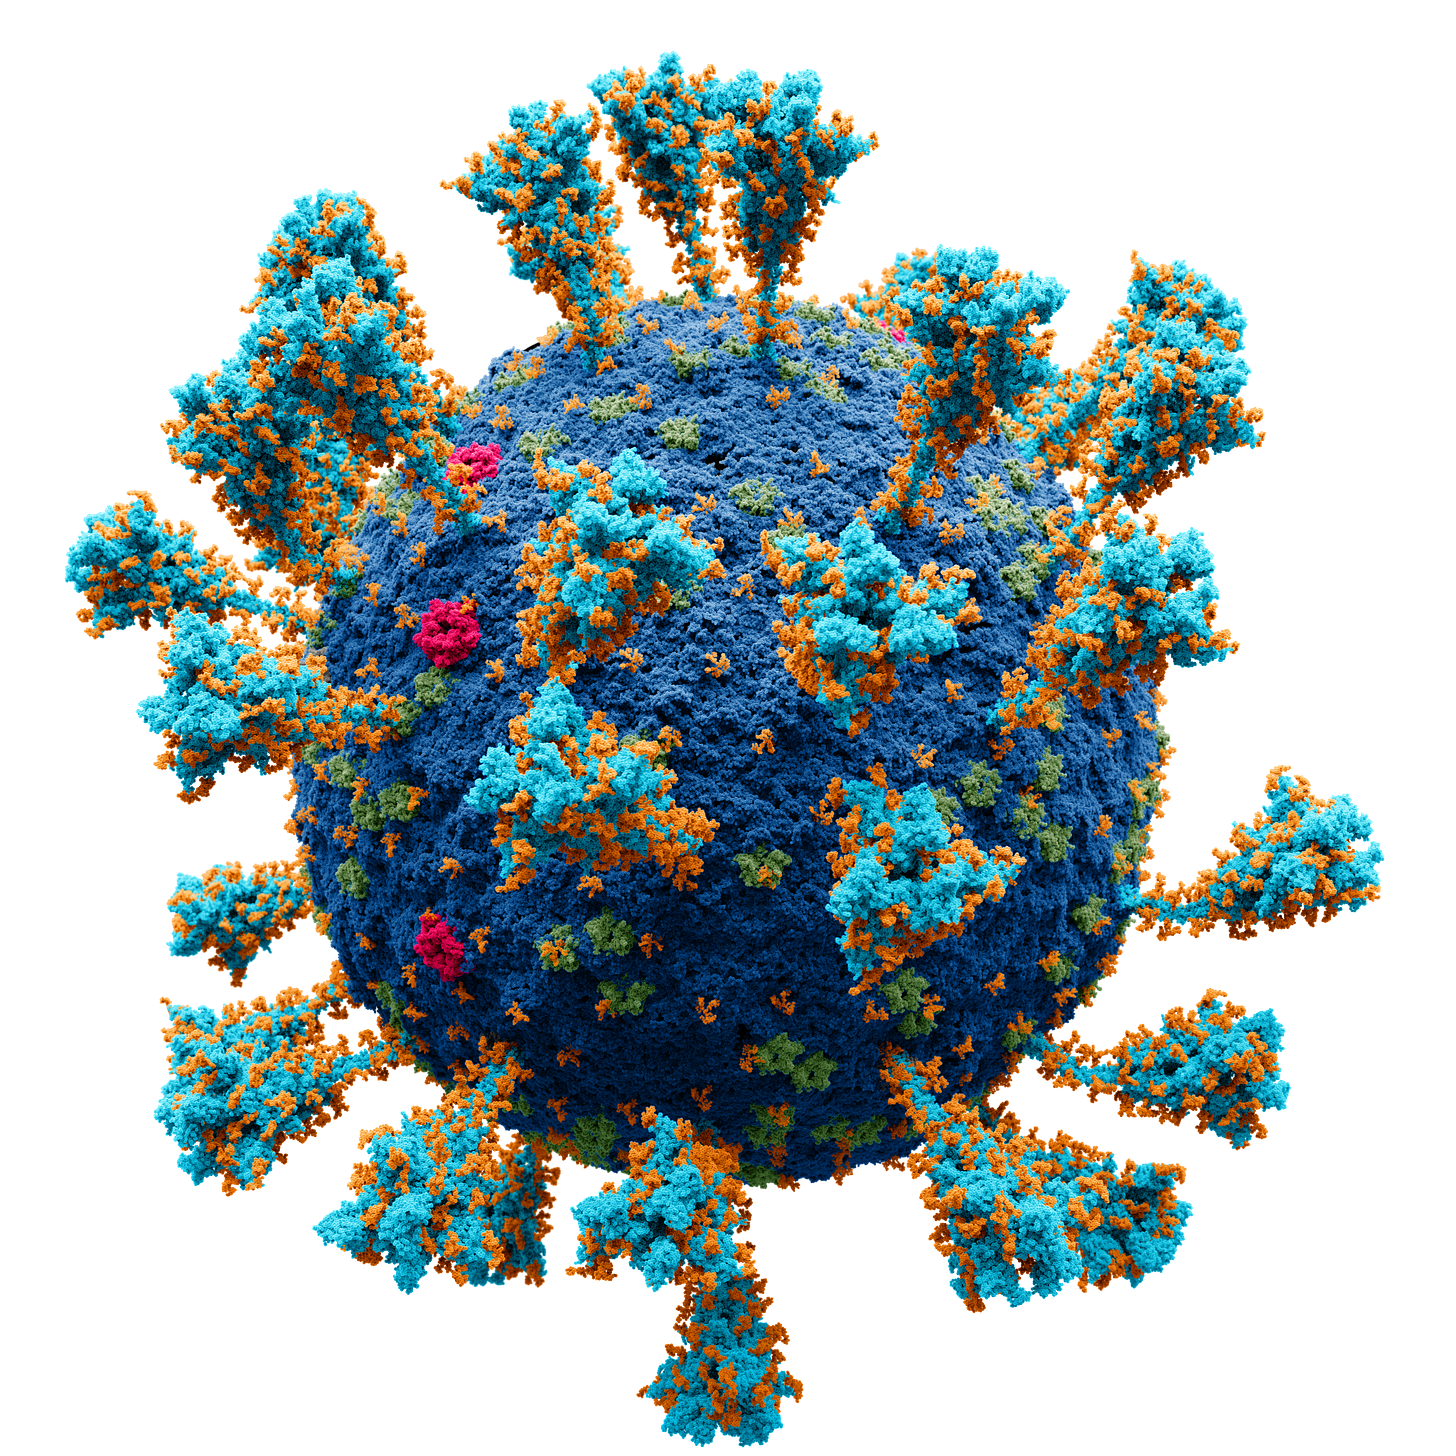 File:Coronavirus. SARS-CoV-2.png - Wikimedia Commons